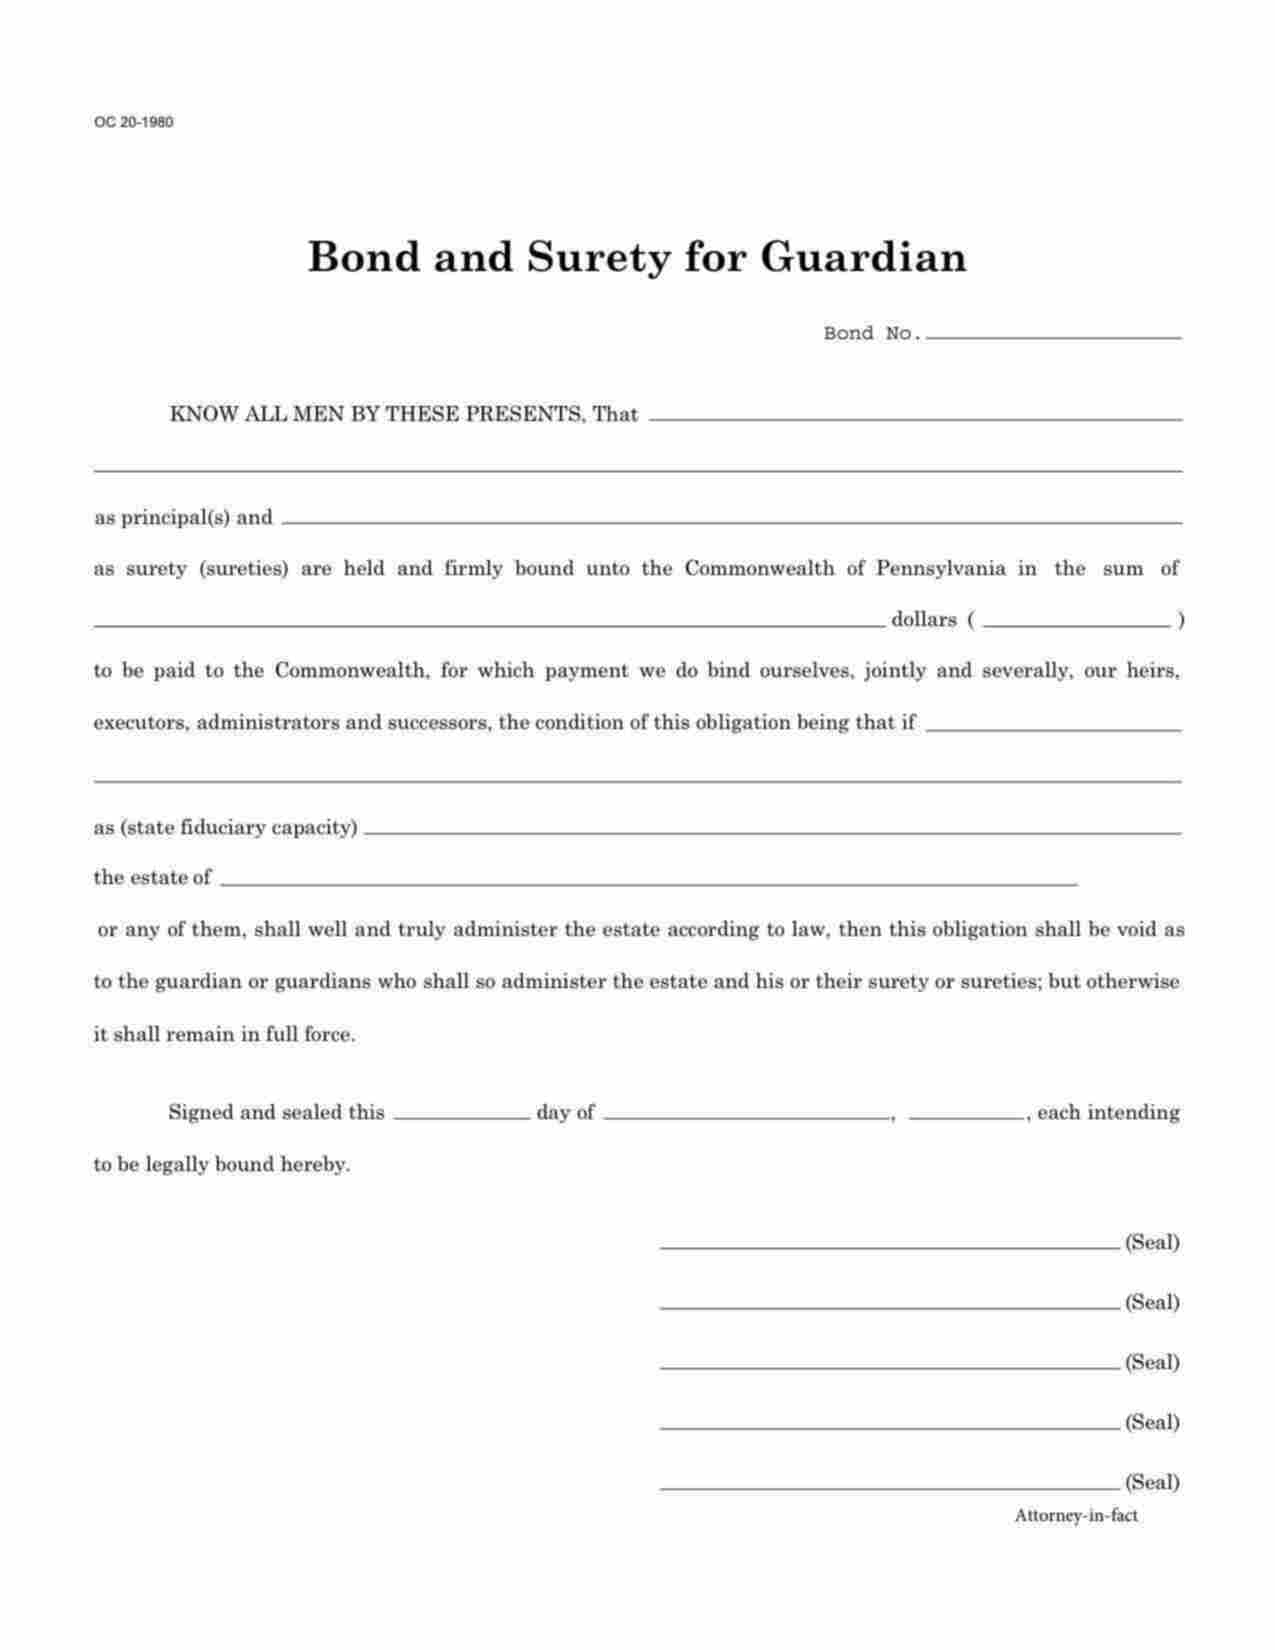 Pennsylvania Conservator/Guardian Bond Form